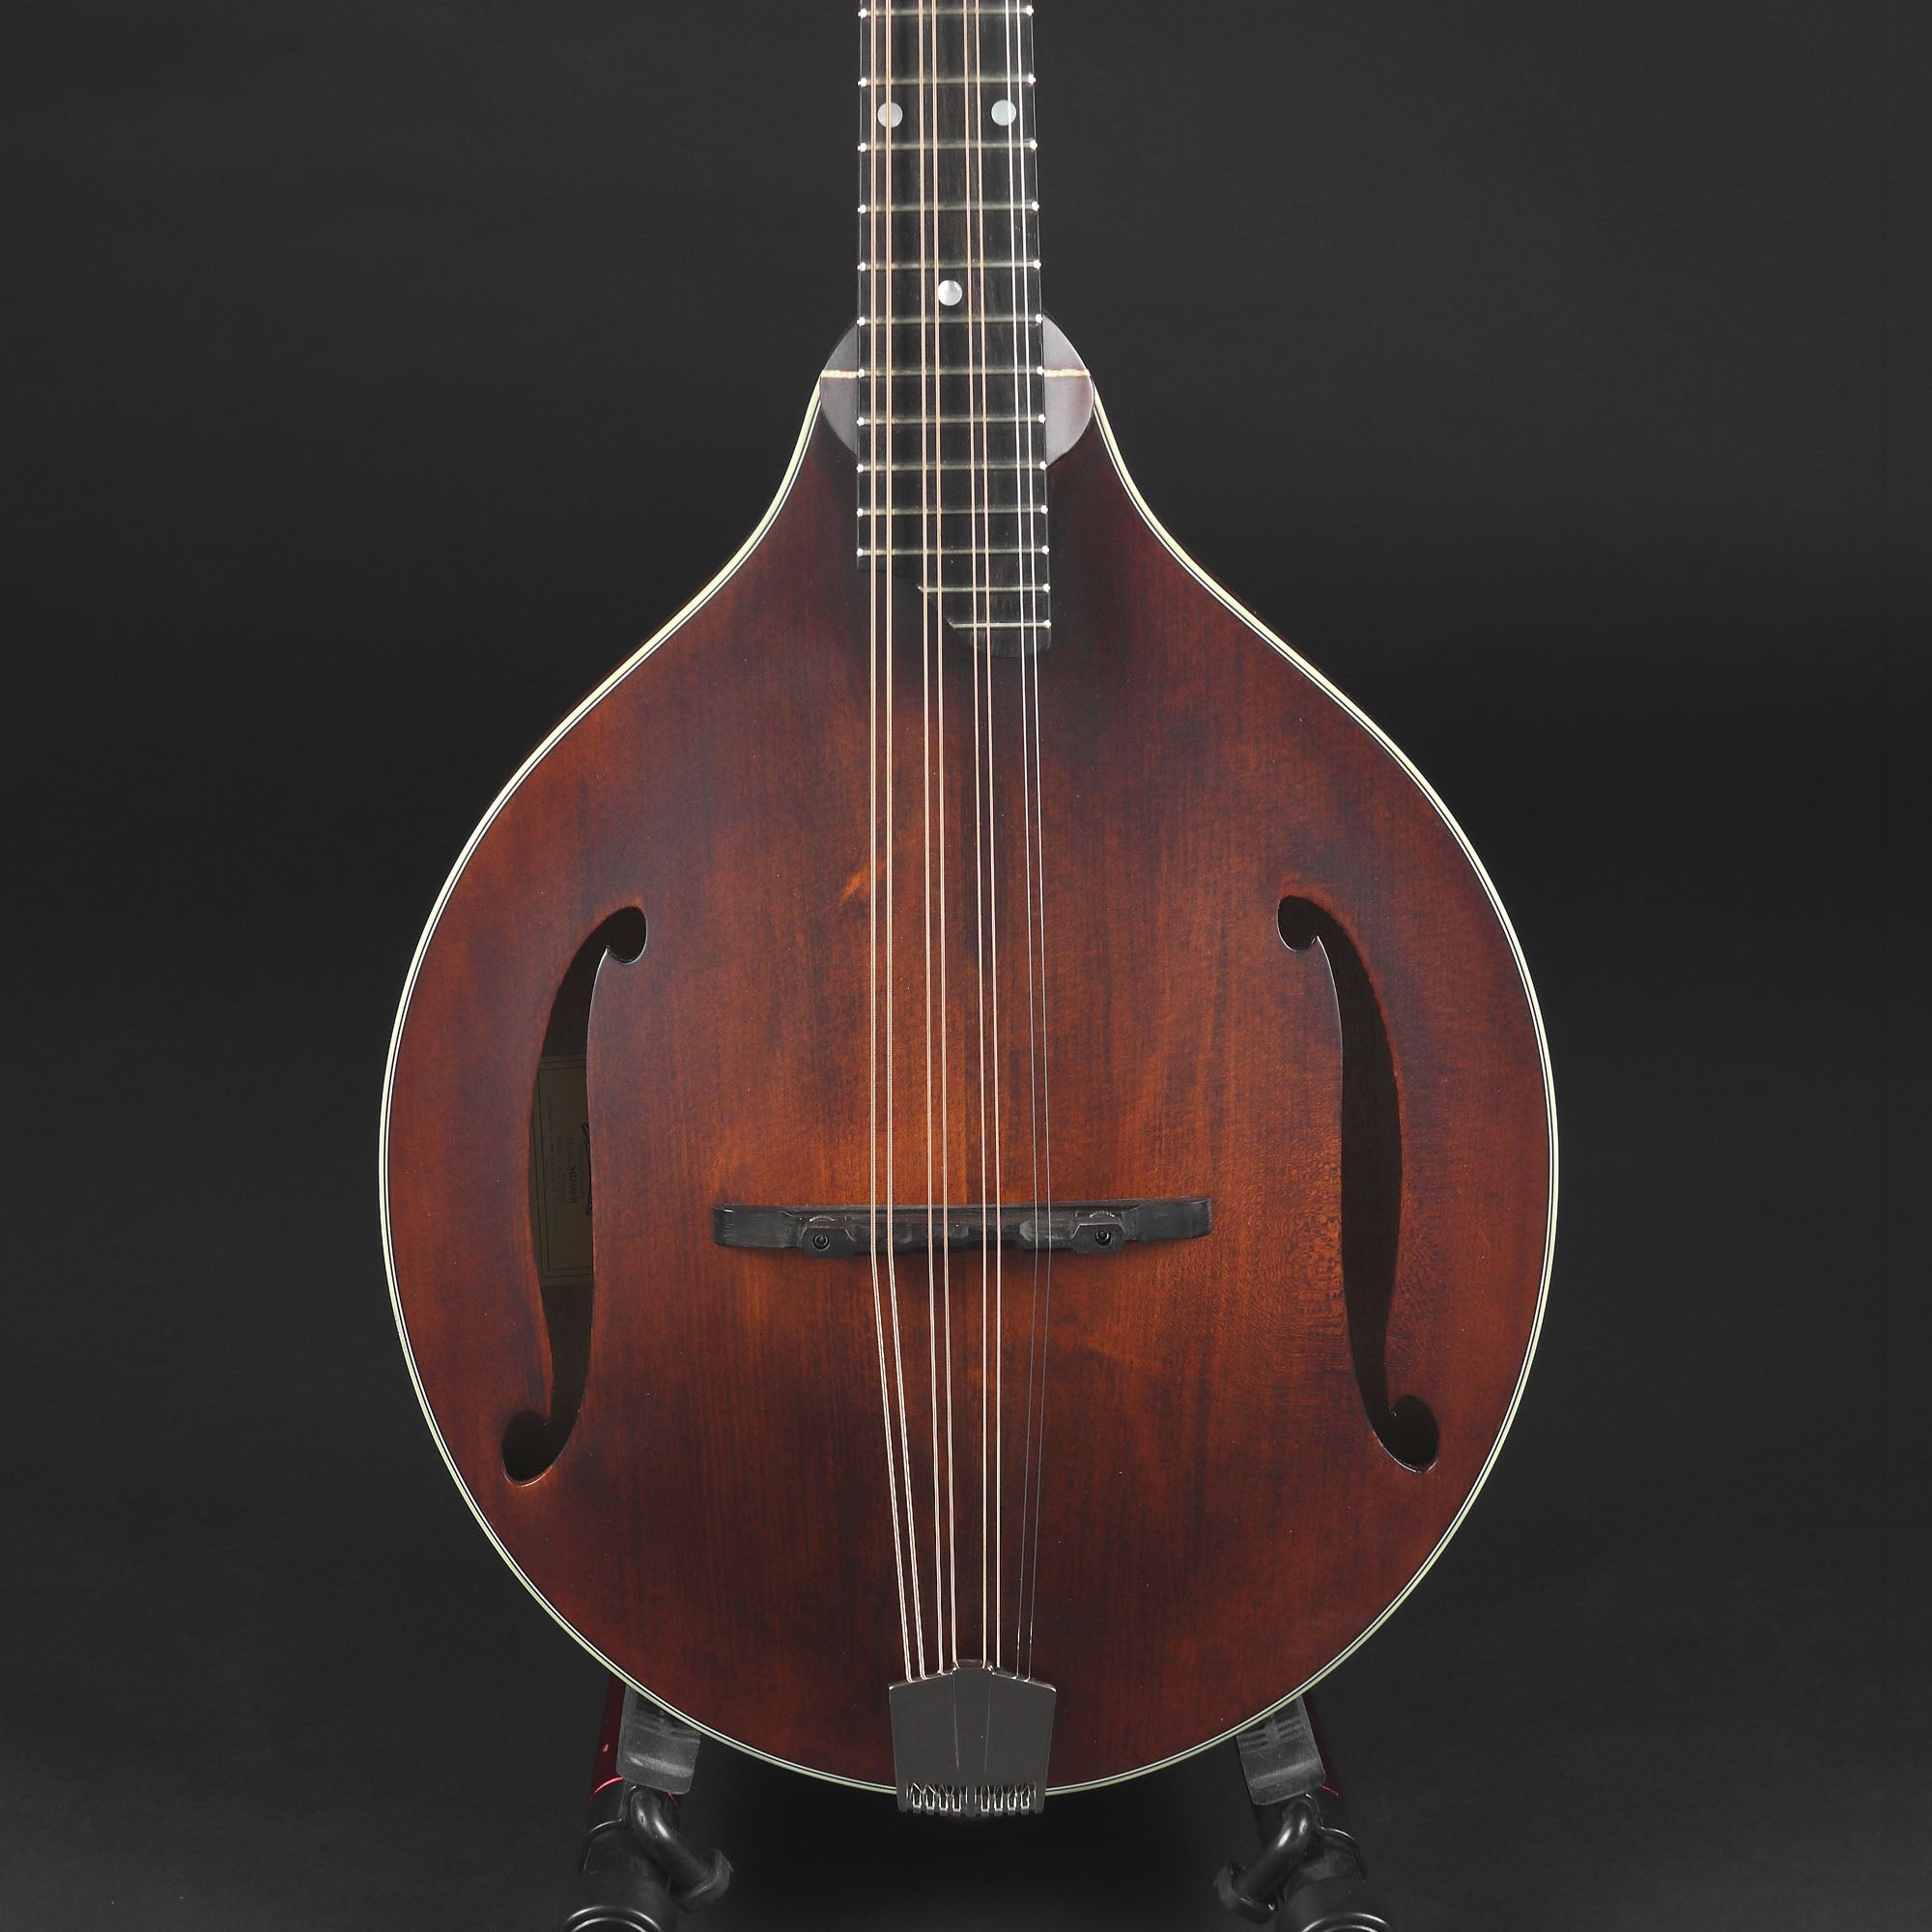 Eastman MDO305 A-style Octave Mandolin #4442